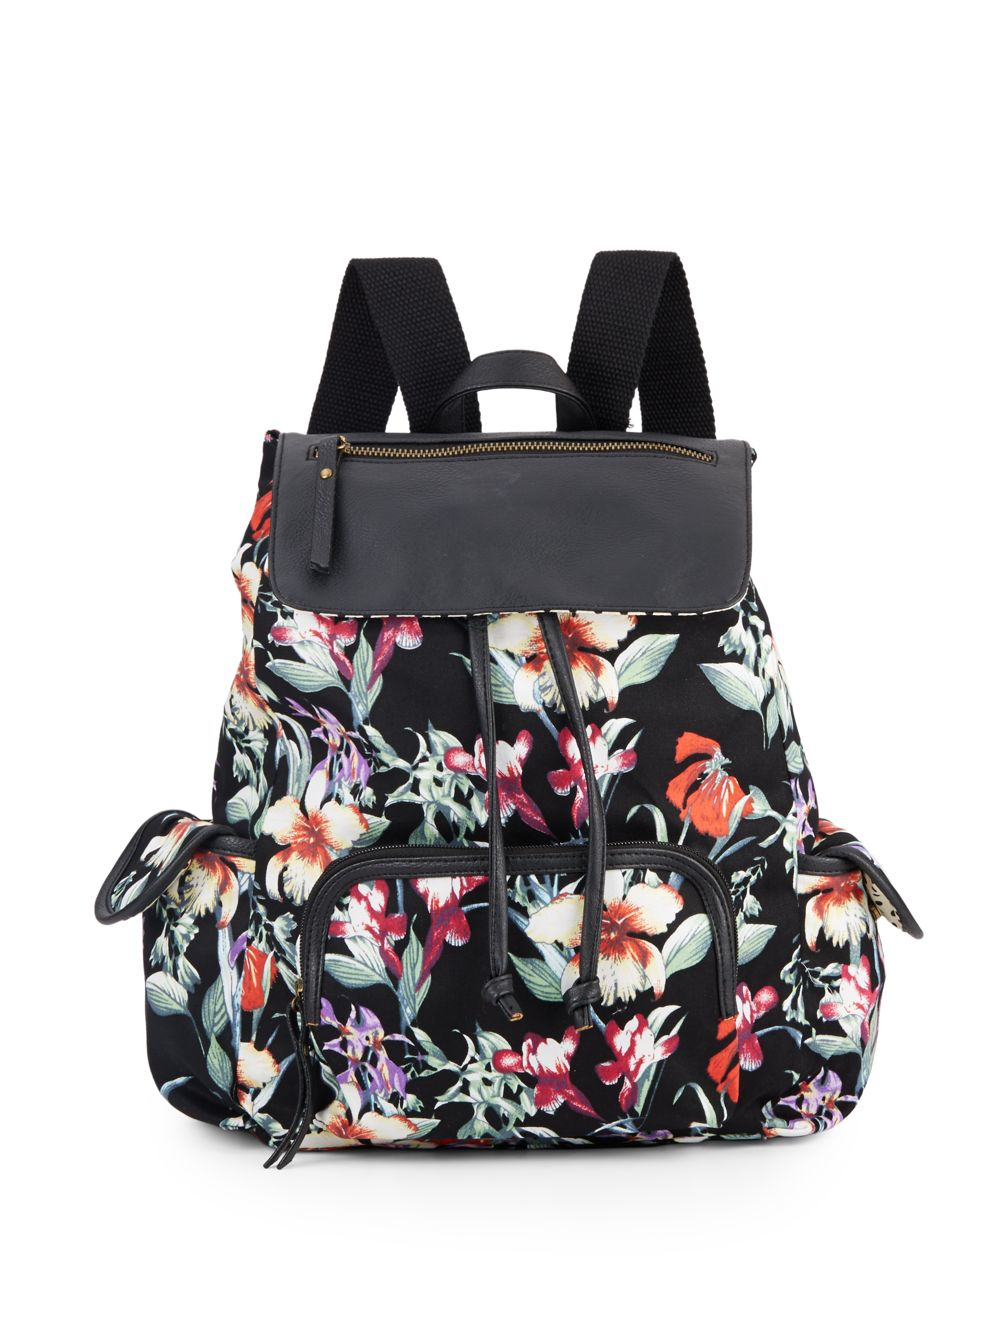 Lyst - Madden Girl Btrender Floral-print Backpack in Black